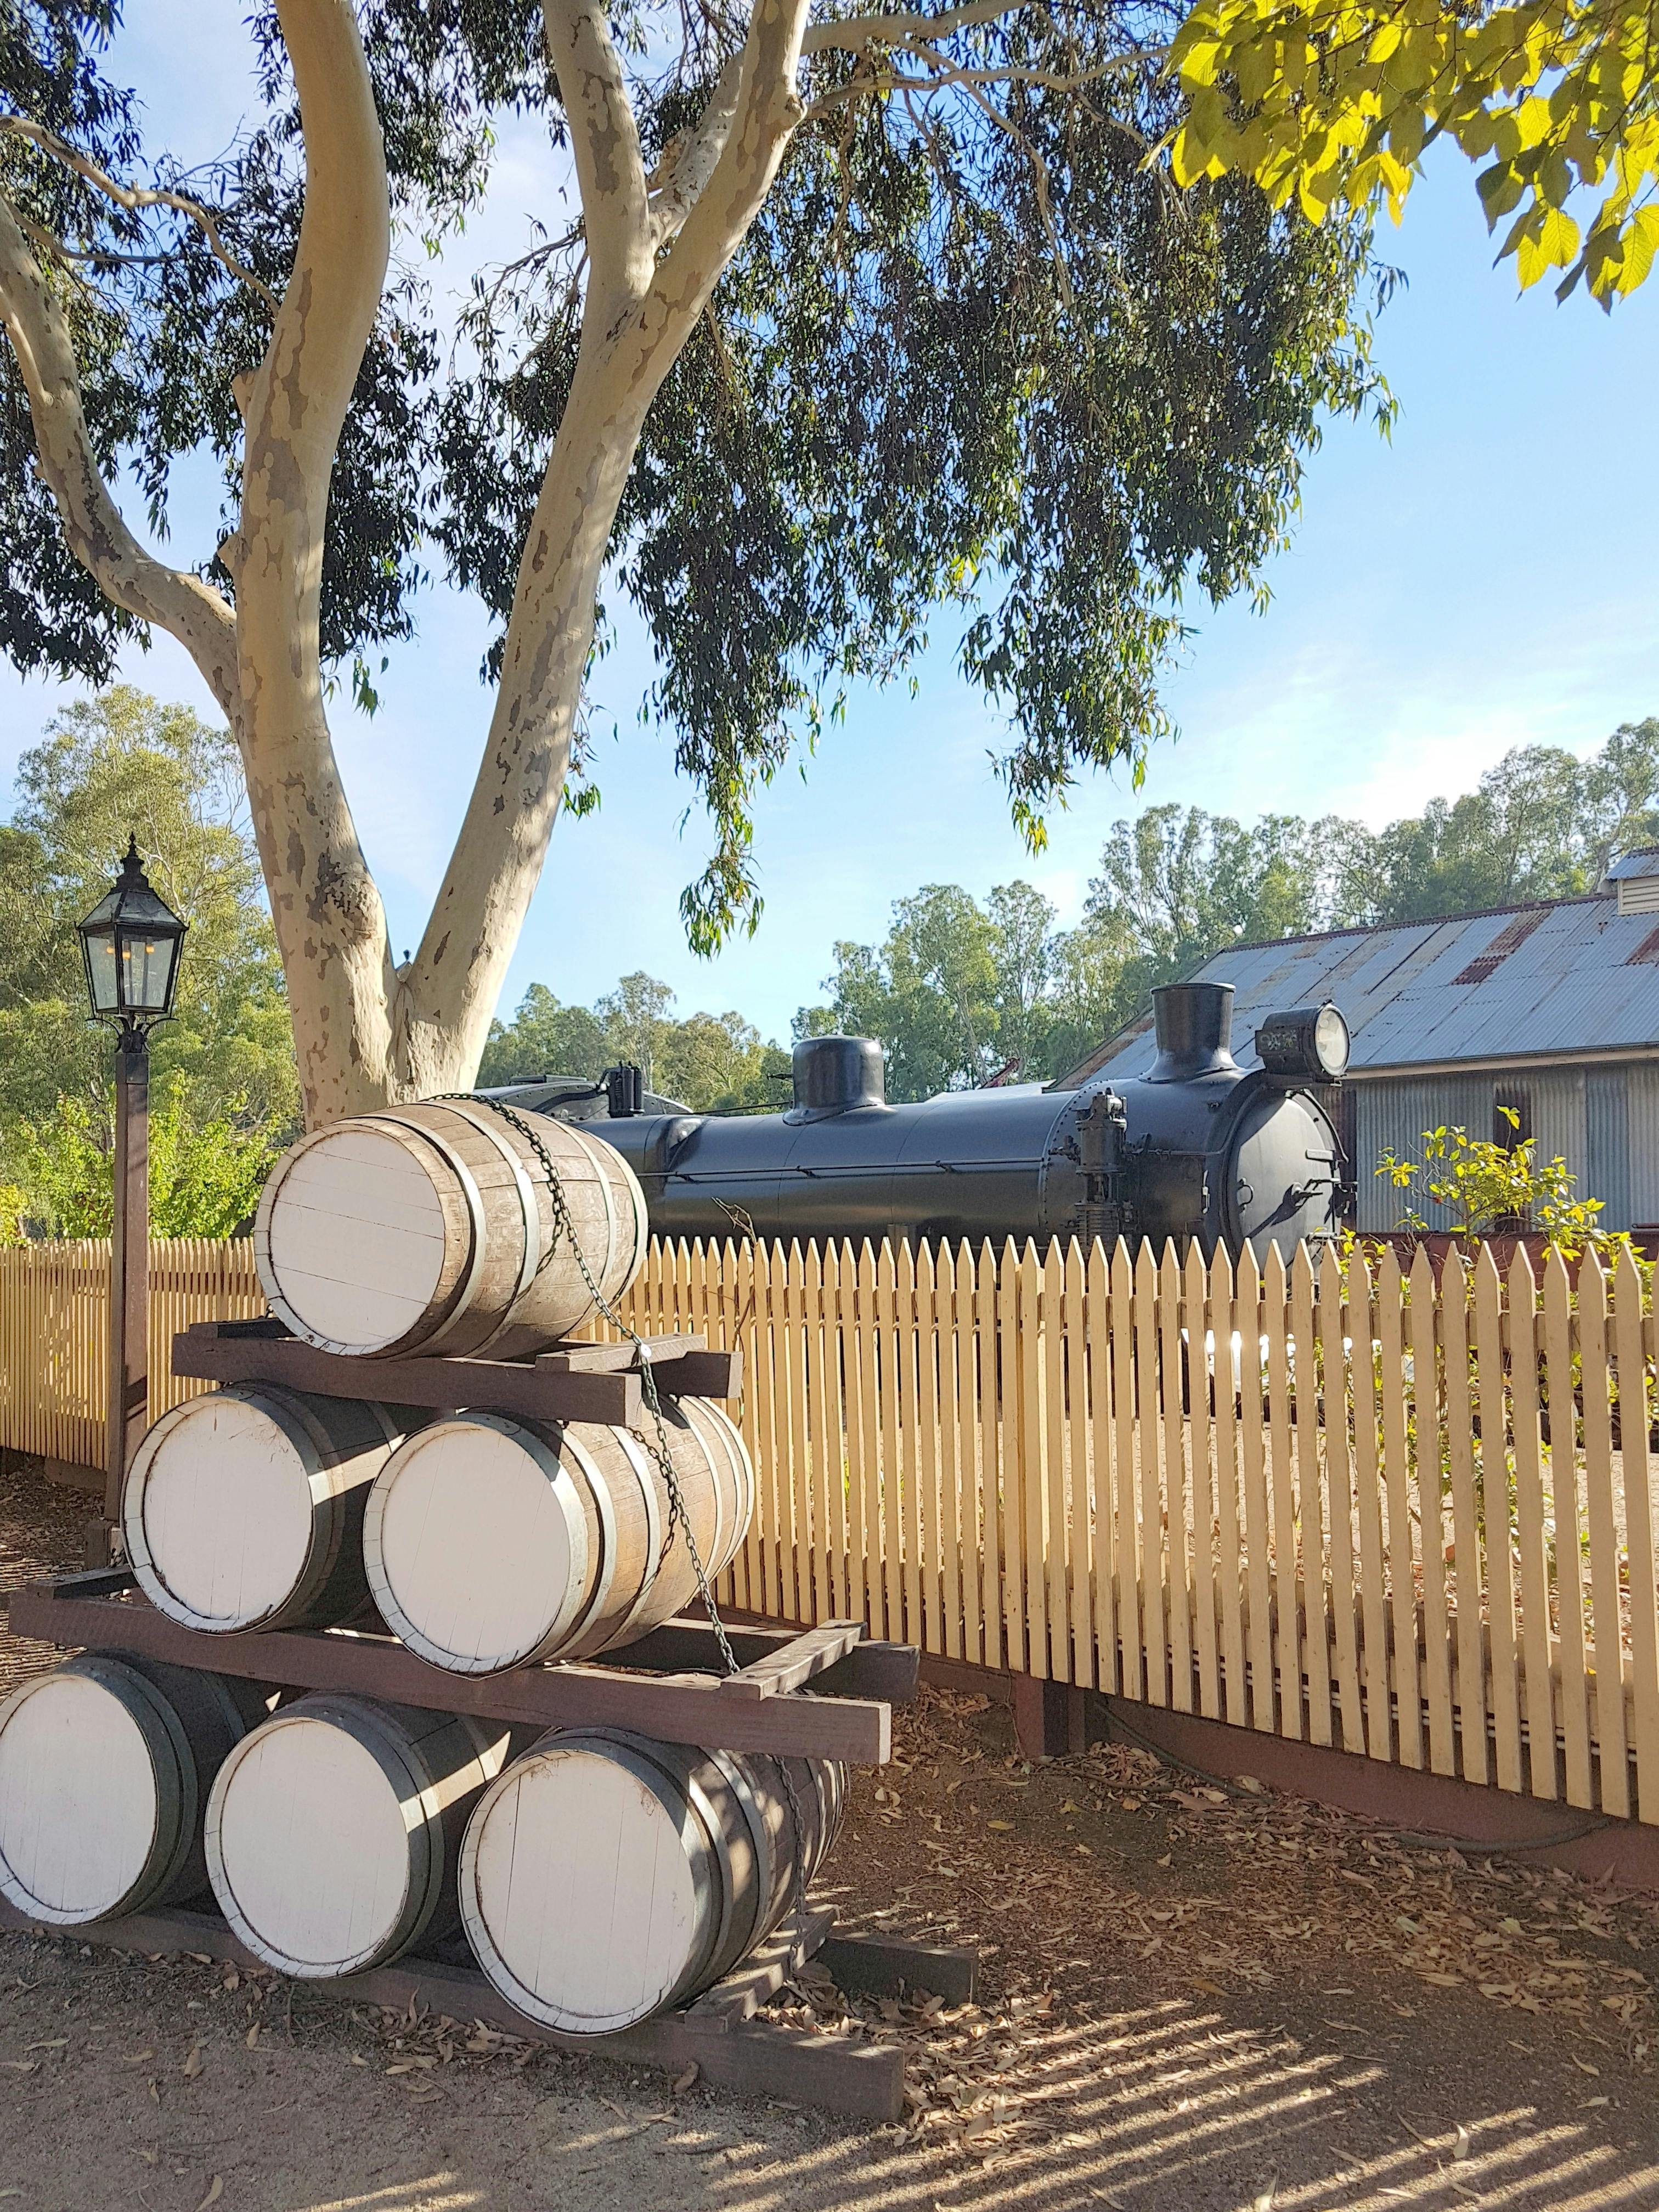 Free stock photo of barrels, fences, steam train